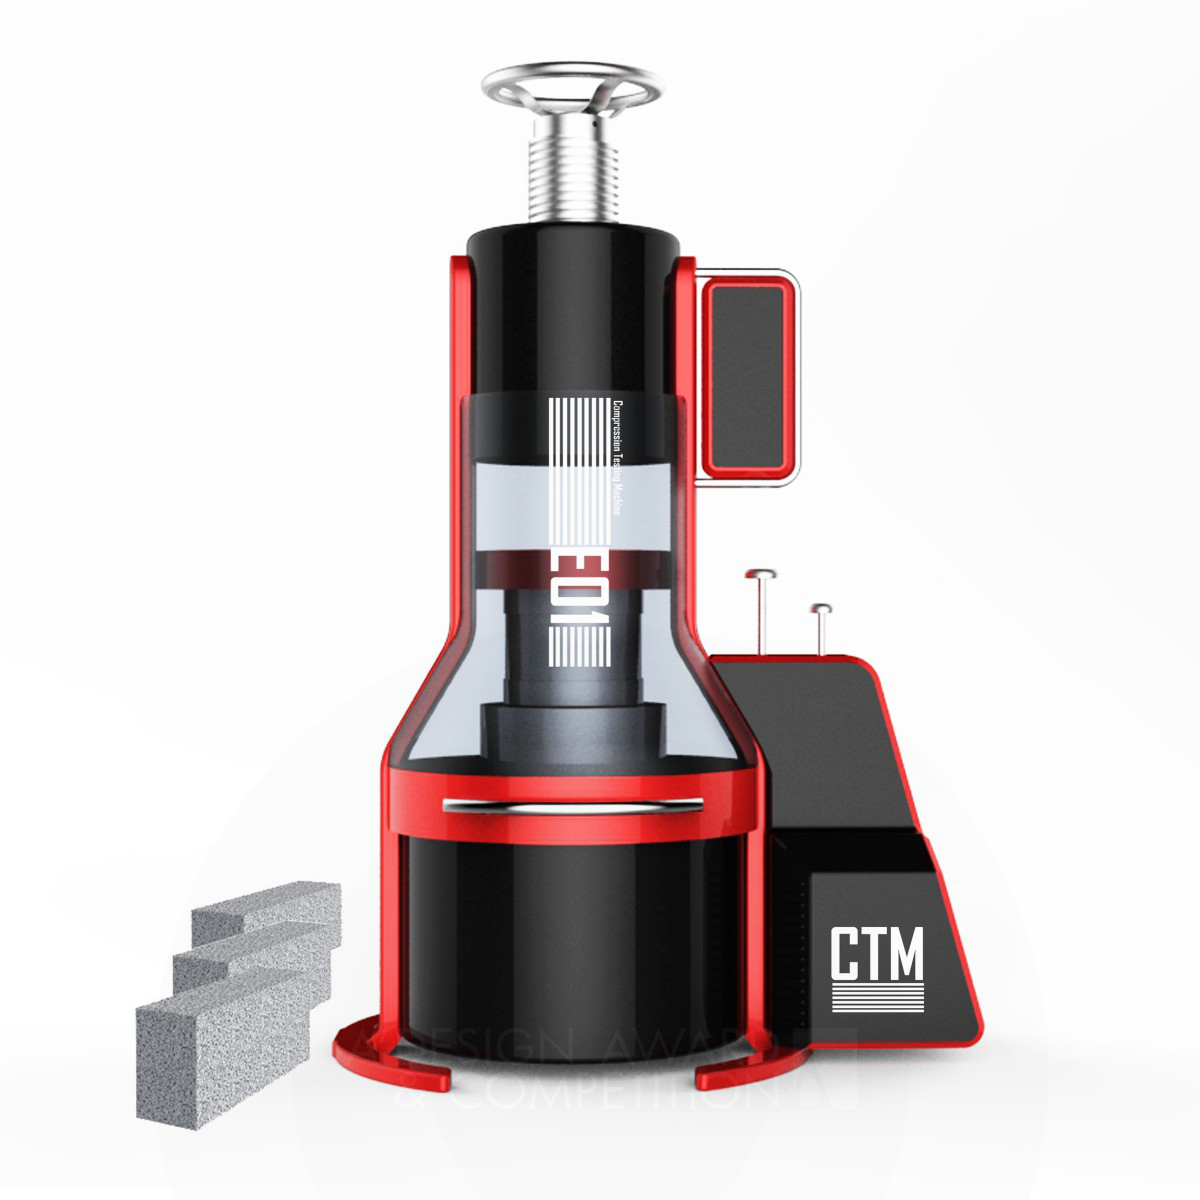 Ctm Compression Testing Equipment by Universal Designovation Lab Llp